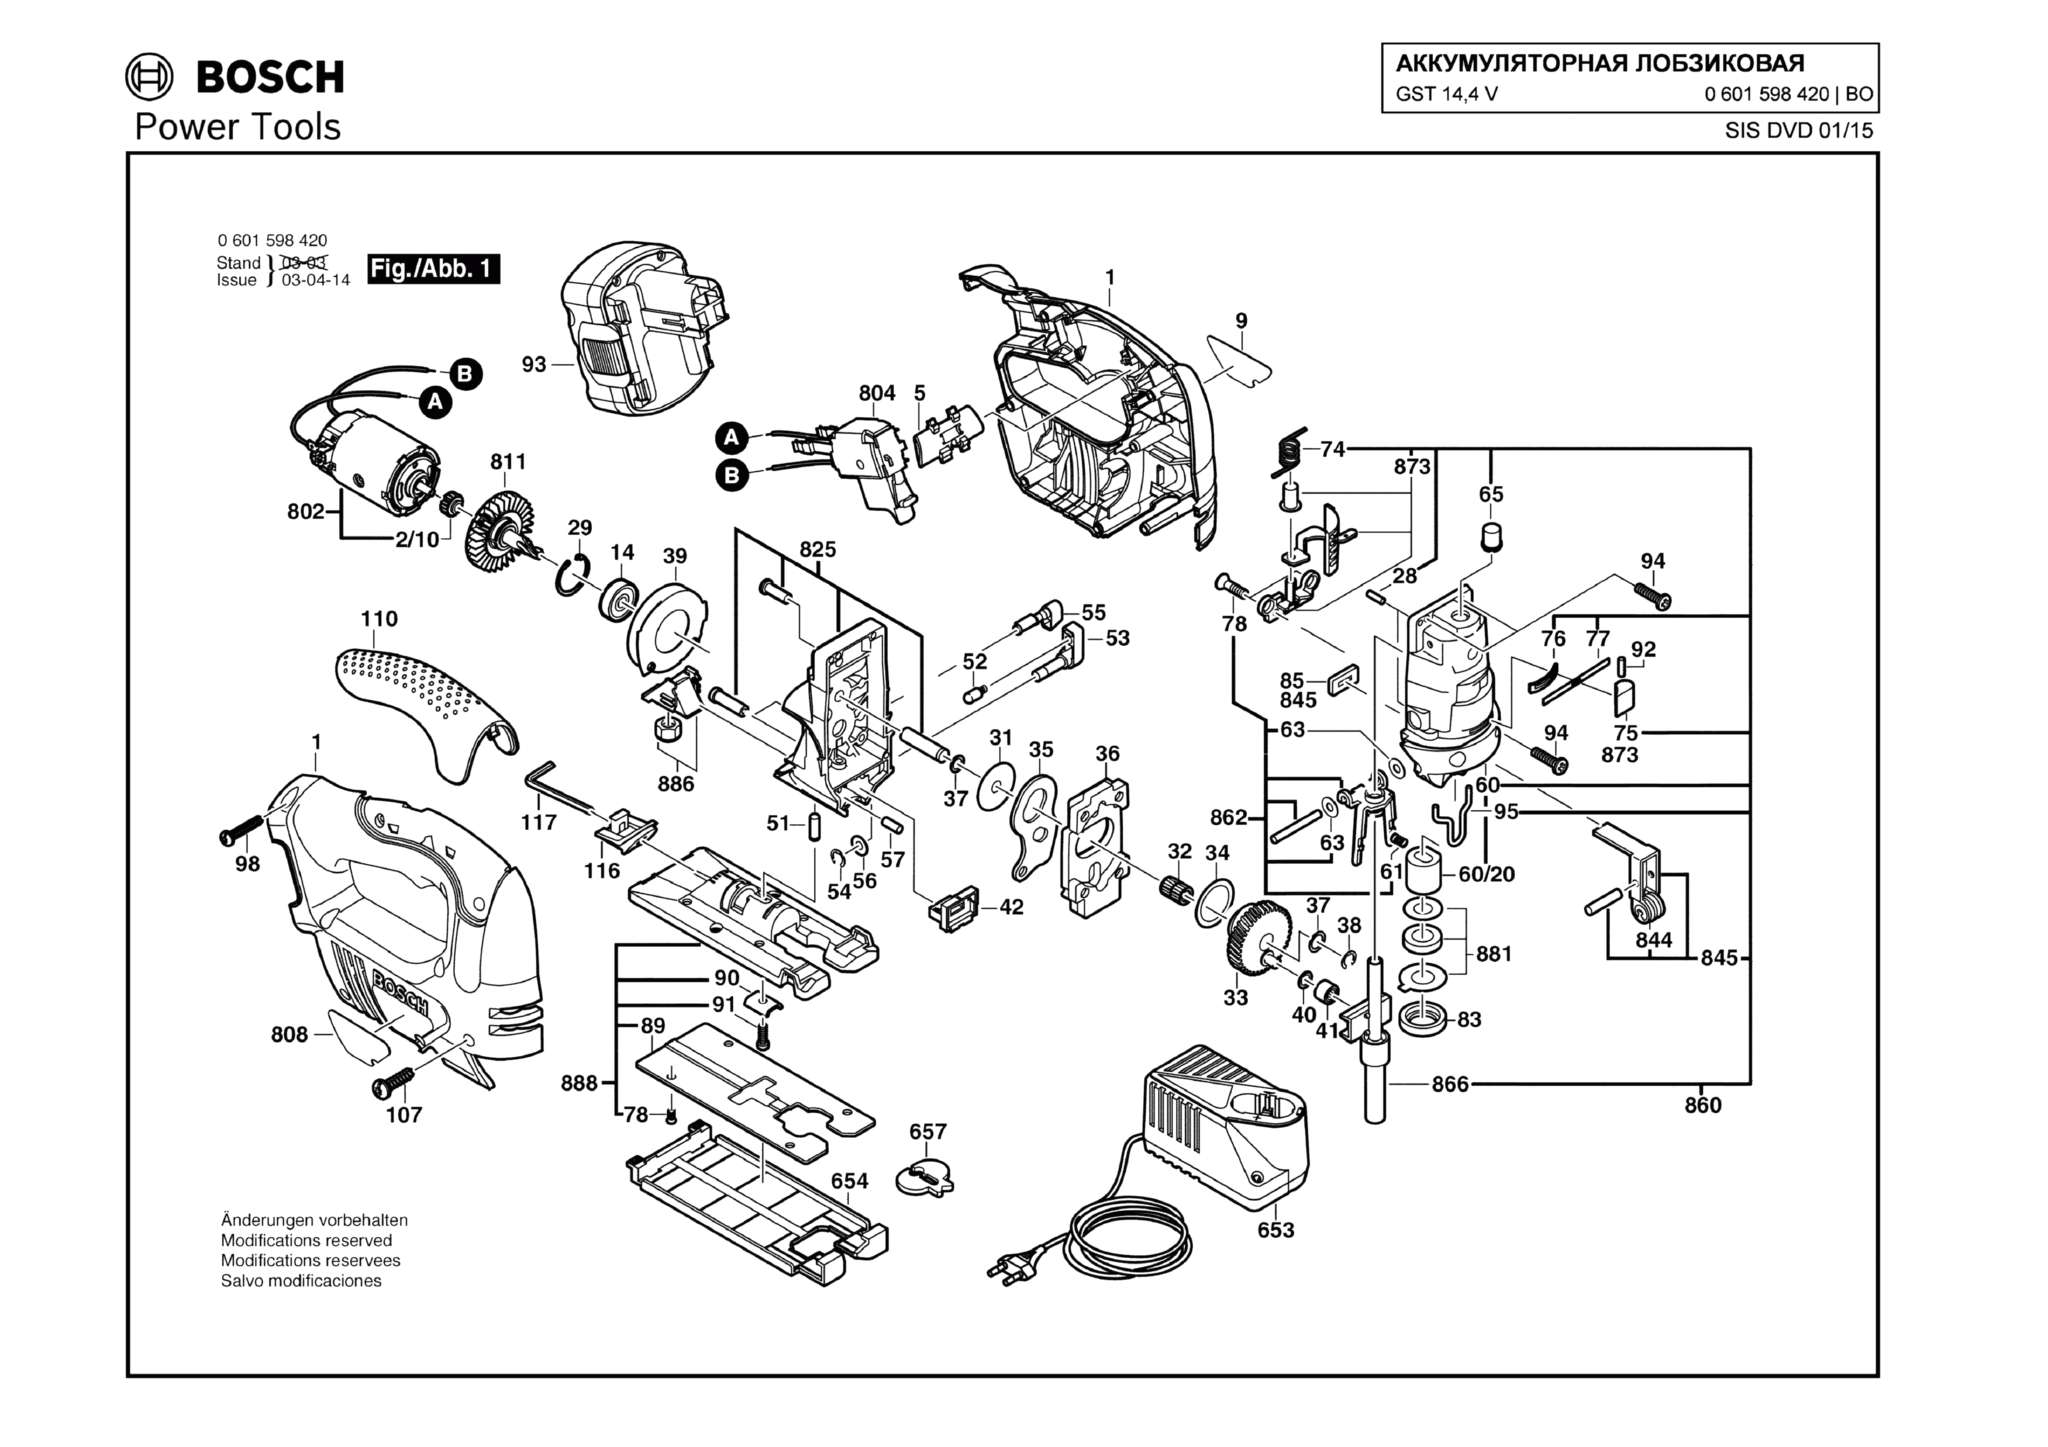 Запчасти, схема и деталировка Bosch GST 14,4 V (ТИП 0601598420)